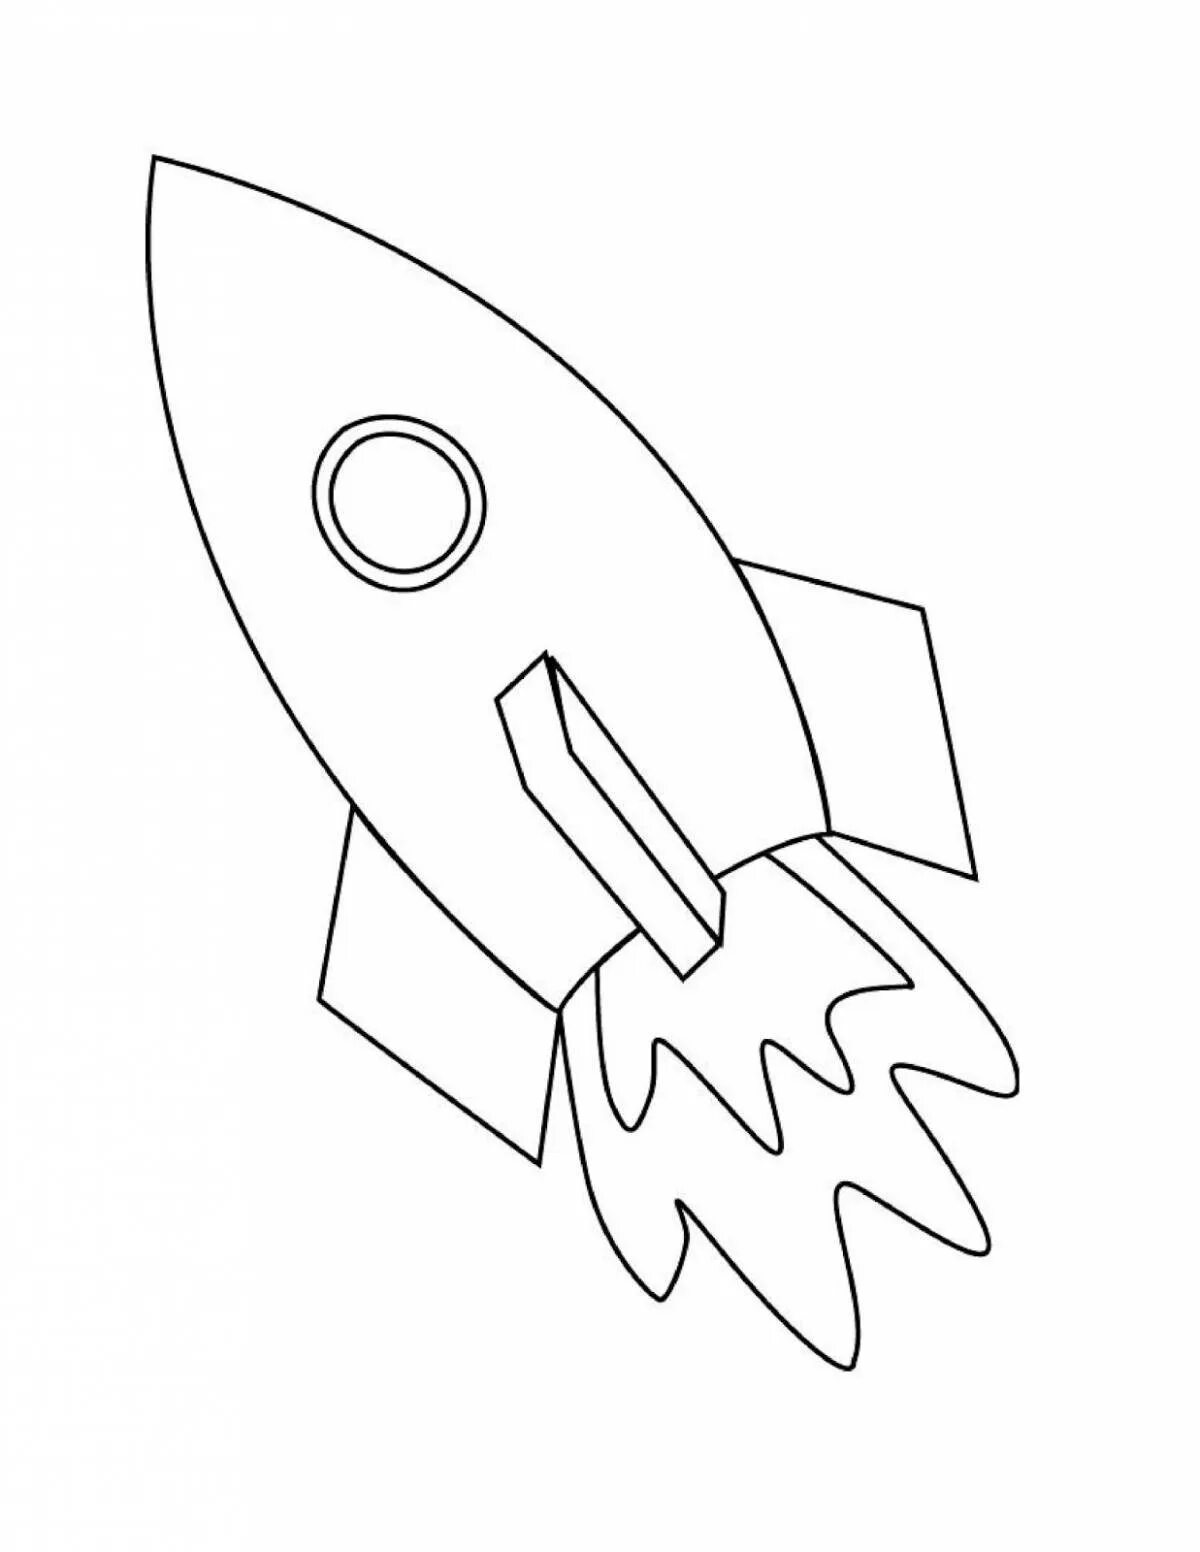 Ракета раскраска. Ракета раскраска для детей. Космическая ракета раскраска. Ракета рисунок контур.